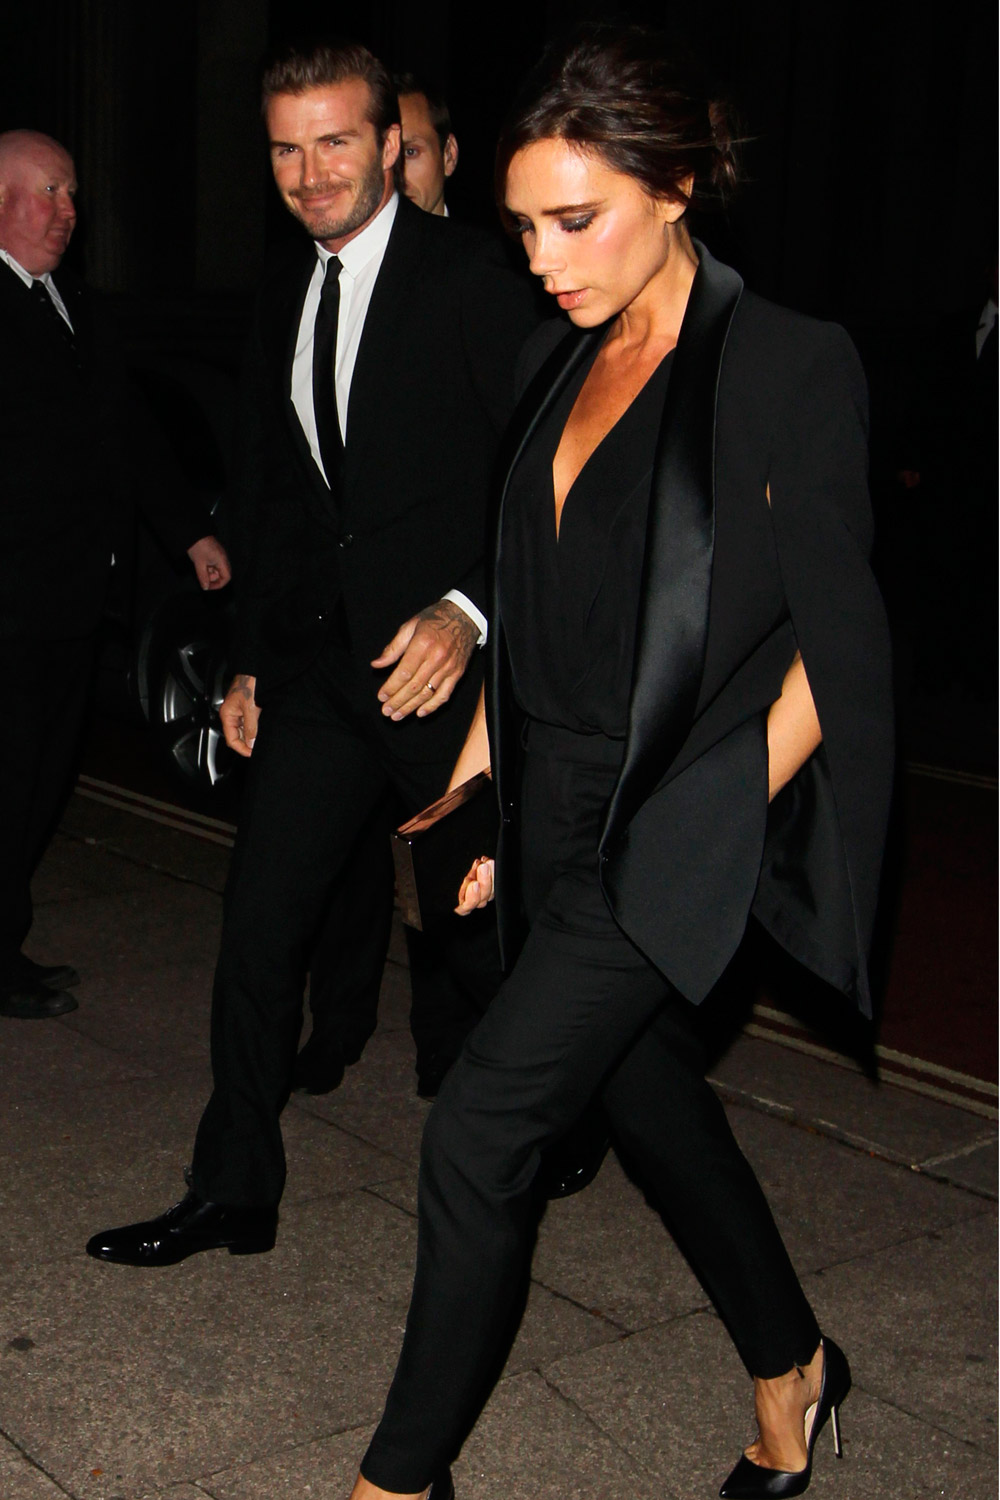 Victoria Beckham and David Beckham at the British Fashion Council party